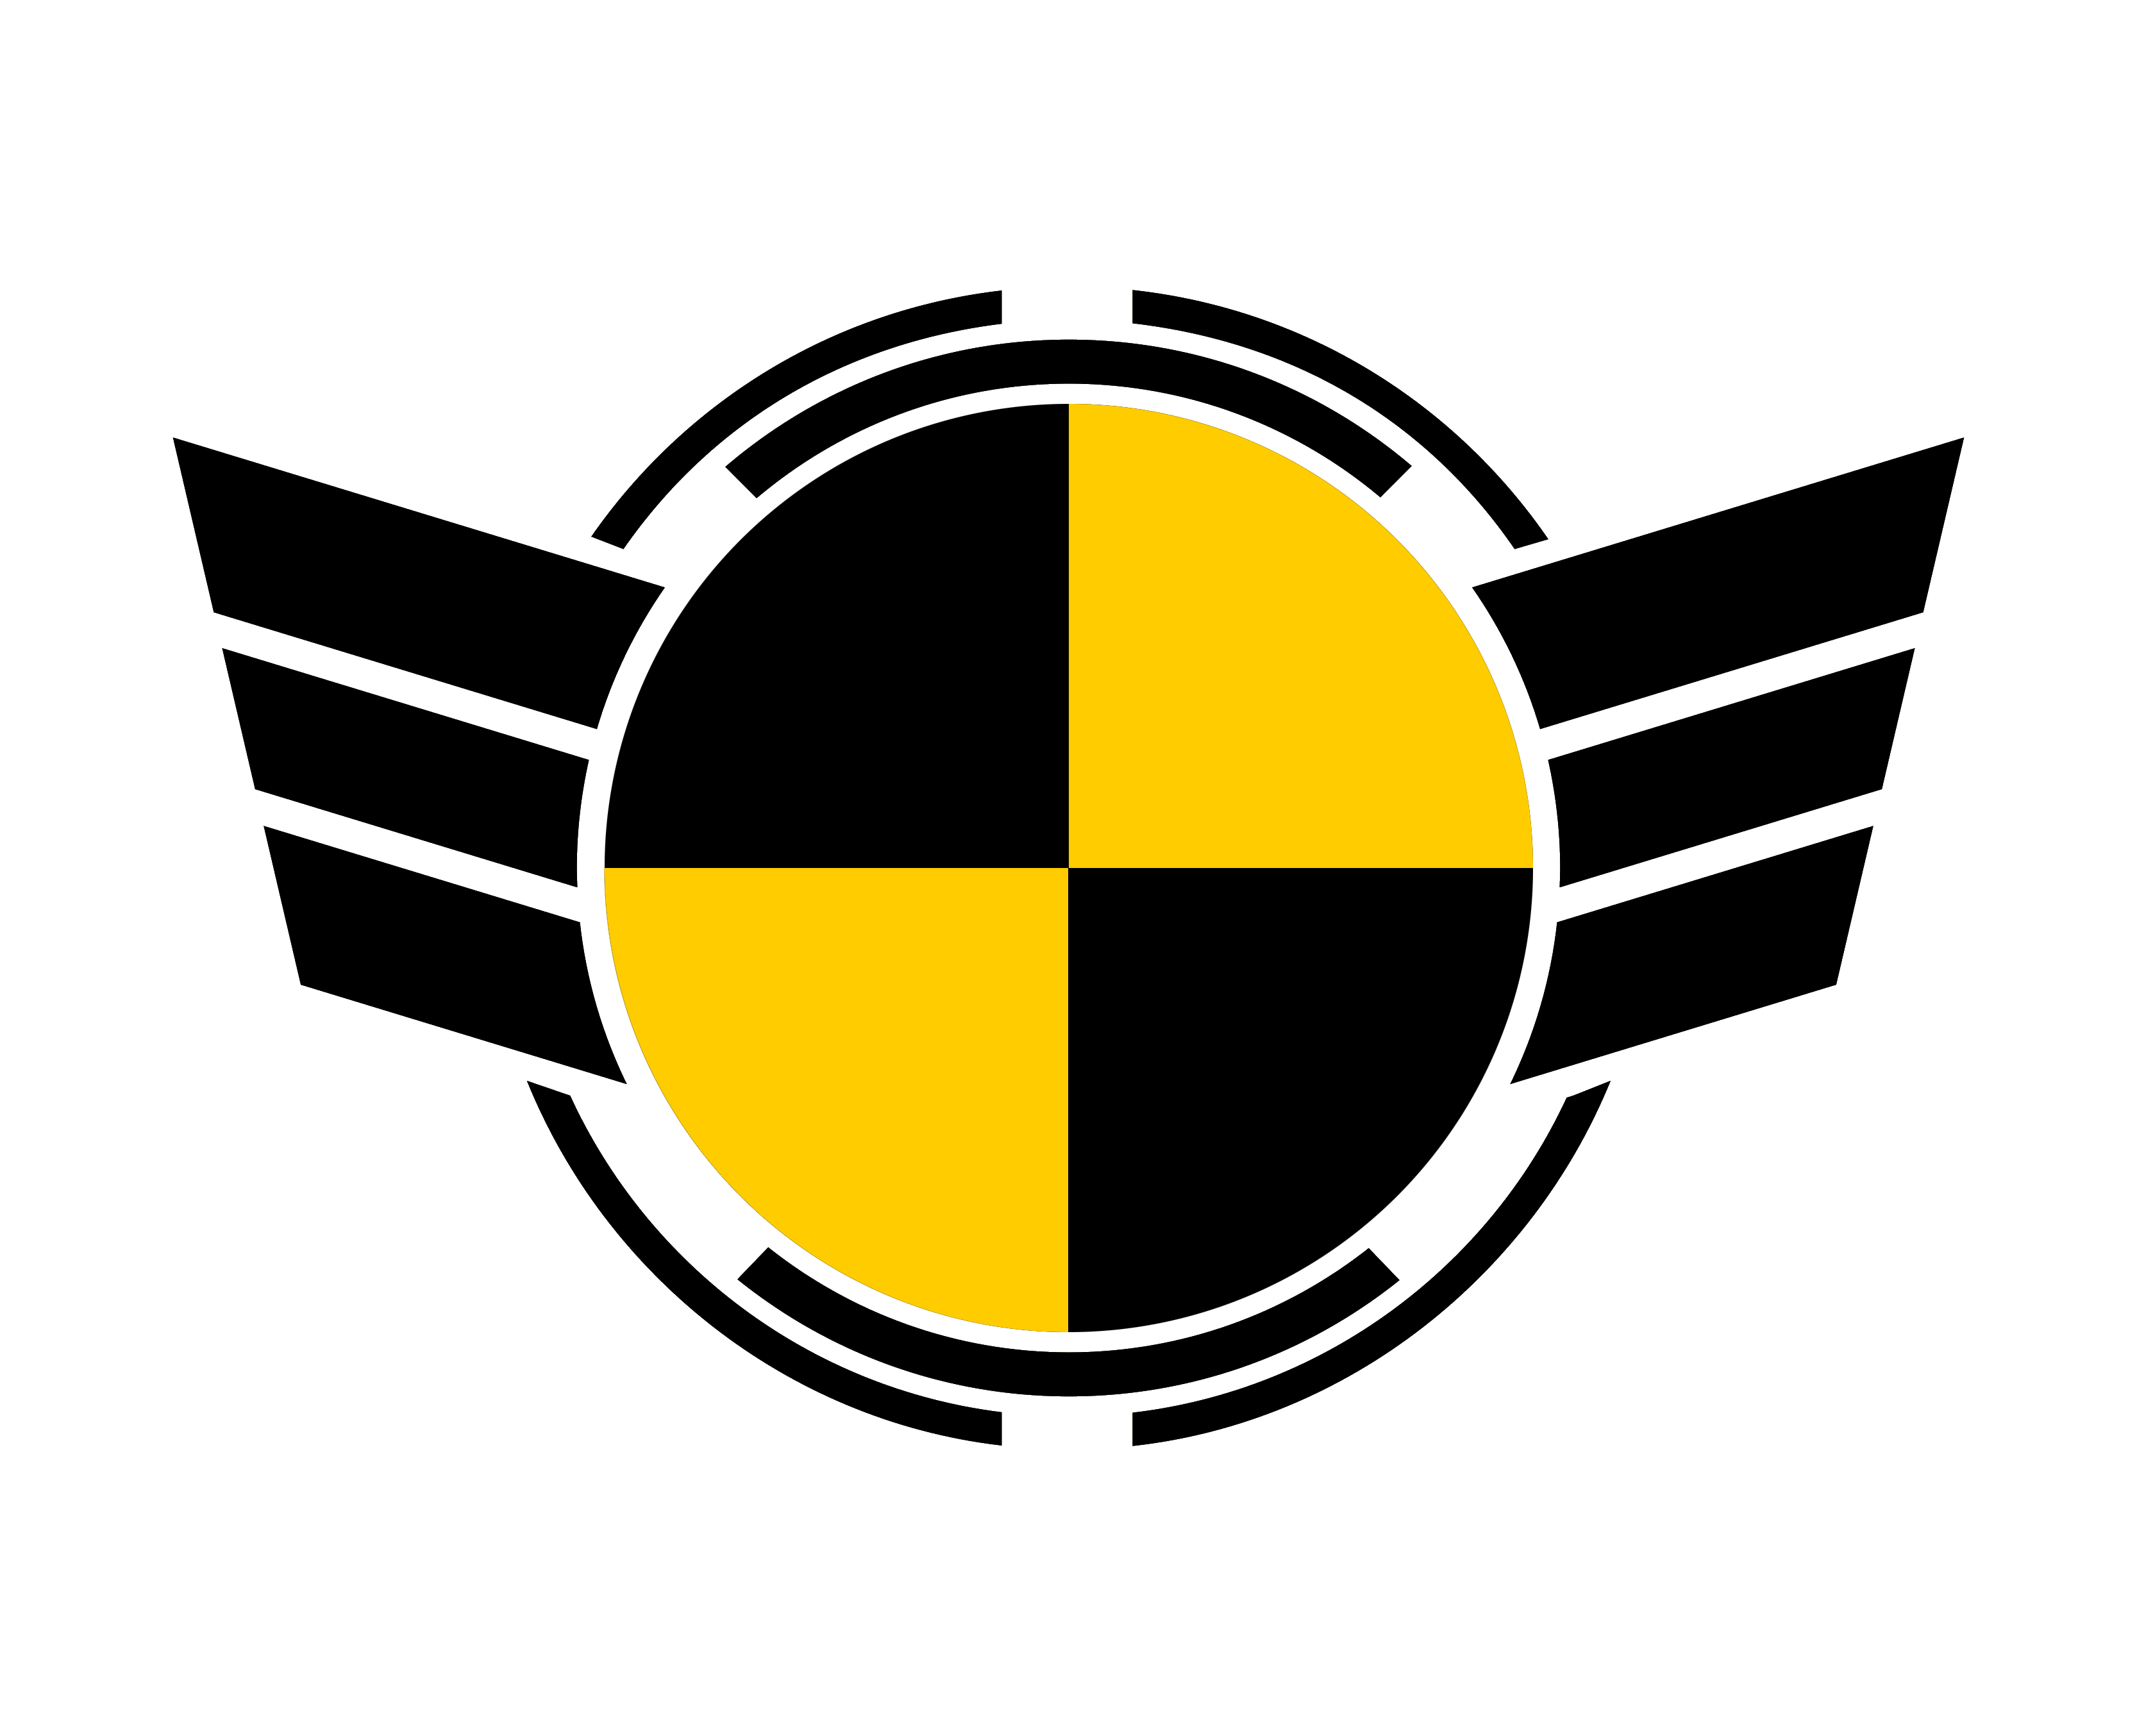 Yellow Organization Logo - TEST logos - full logo with text and simple logos transparent ...